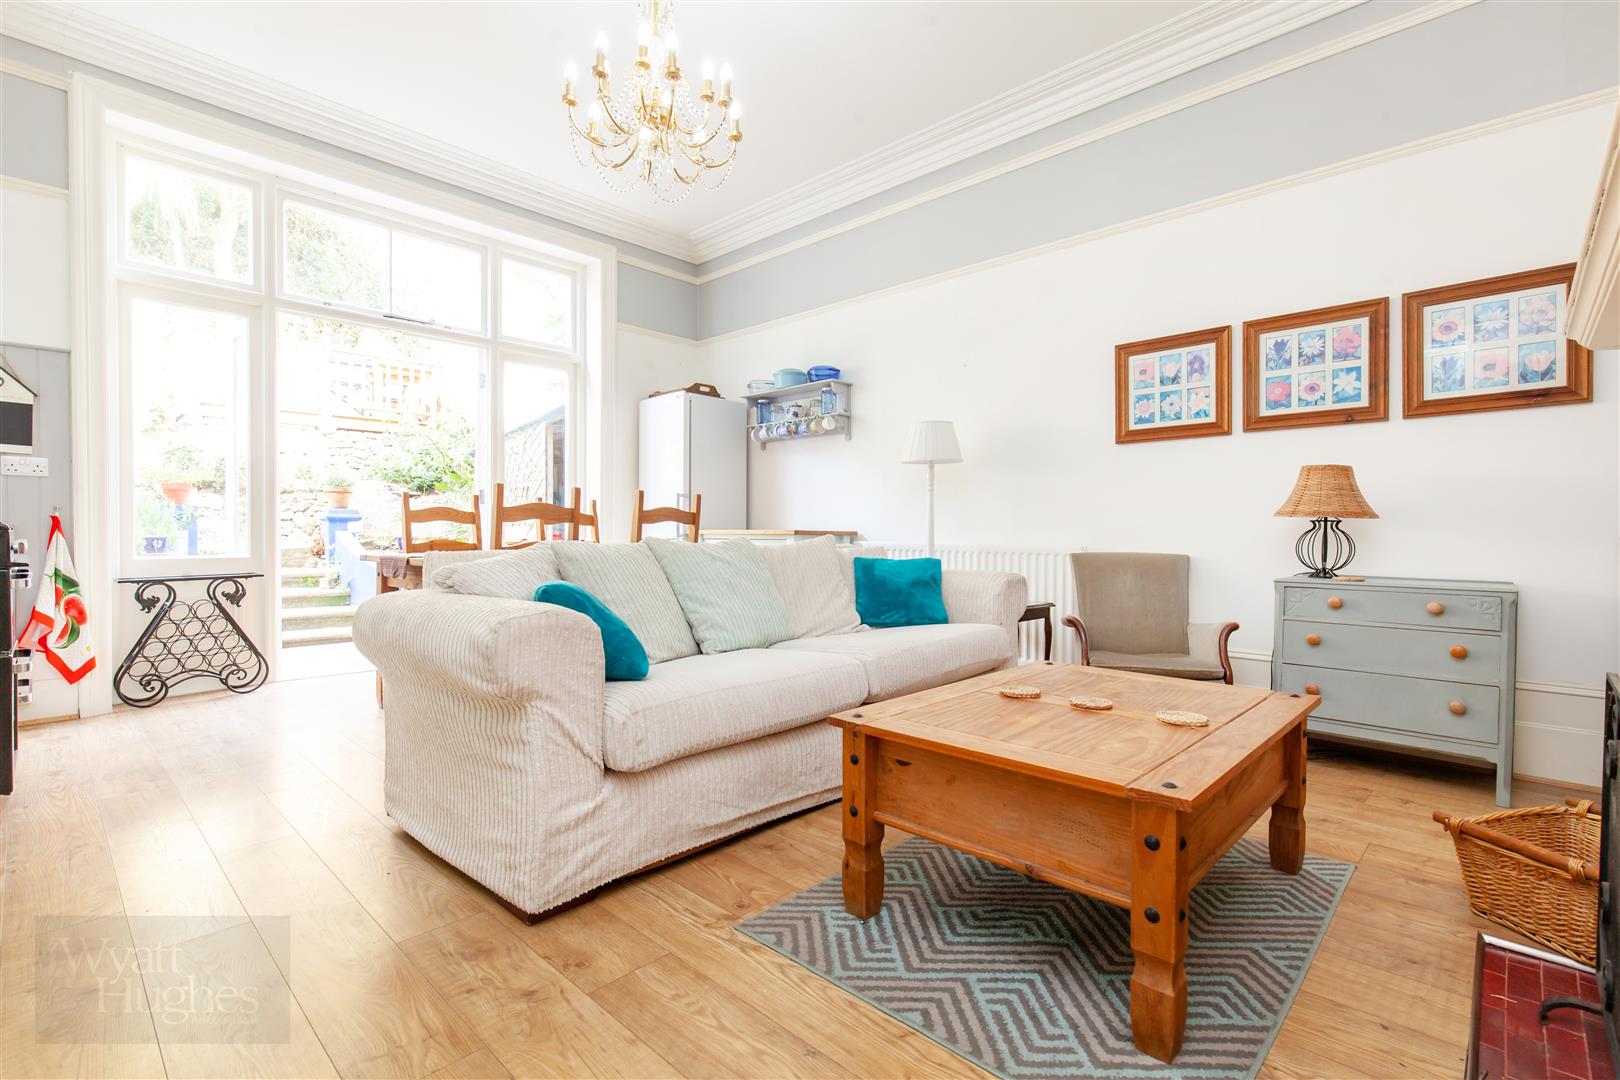 3 bed flat for sale in Grosvenor Crescent, St. Leonards-On-Sea - Property Image 1